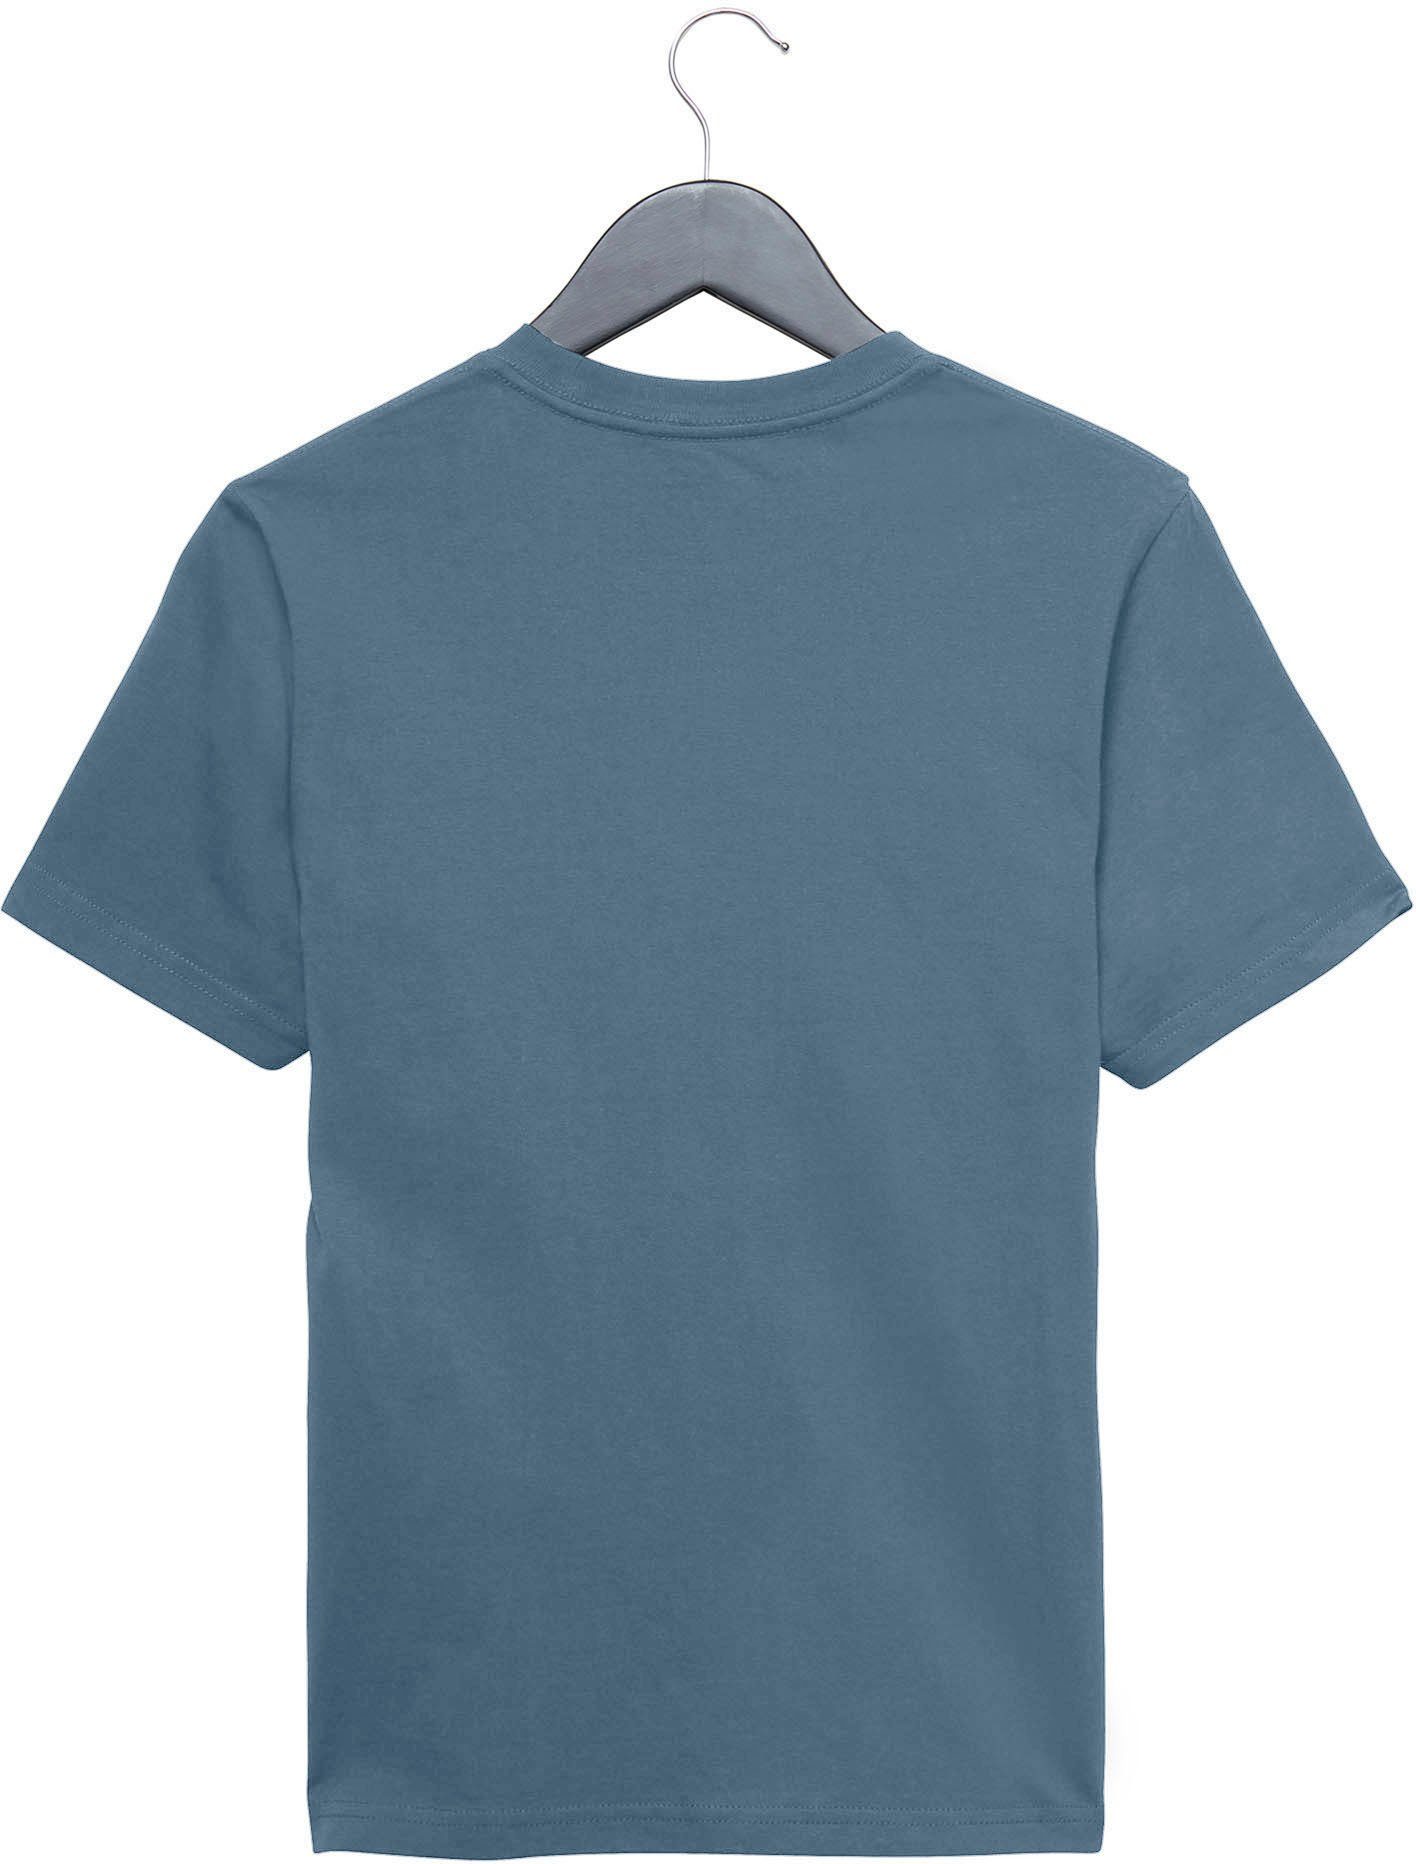 VANS T-Shirt KIDS CLASSIC Vans blau